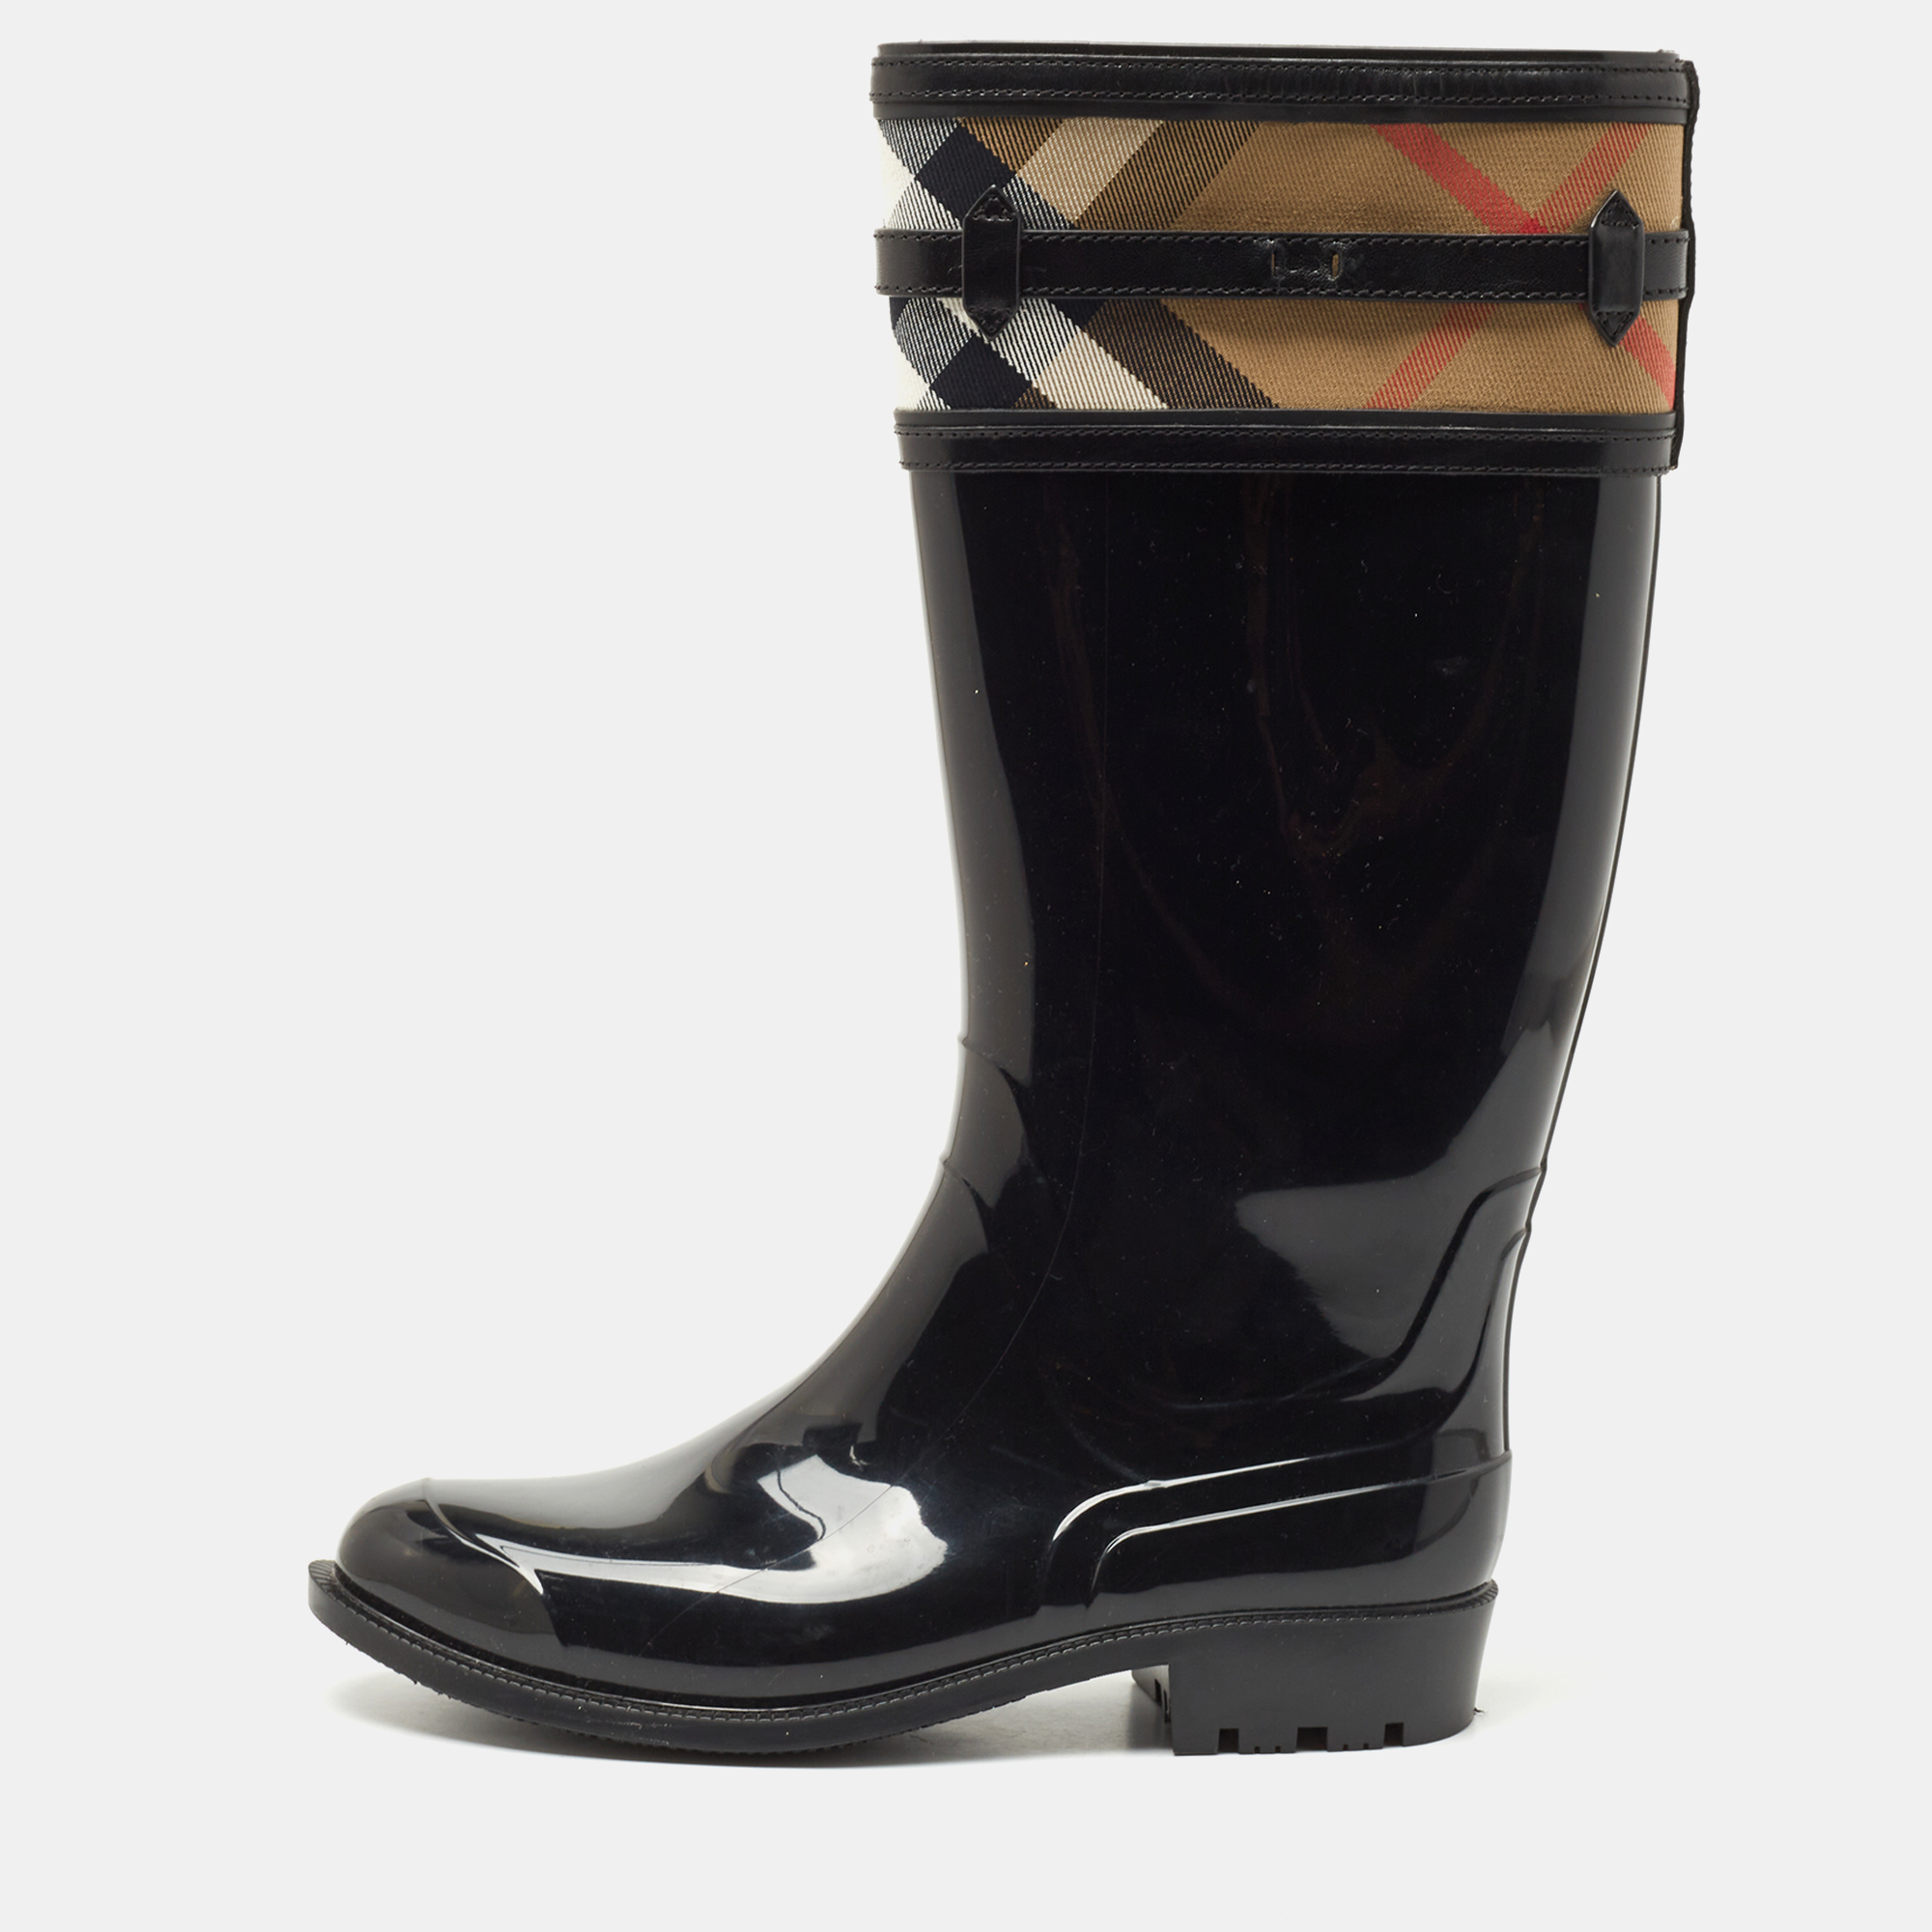 Total 71+ imagen black burberry rain boots - Abzlocal.mx